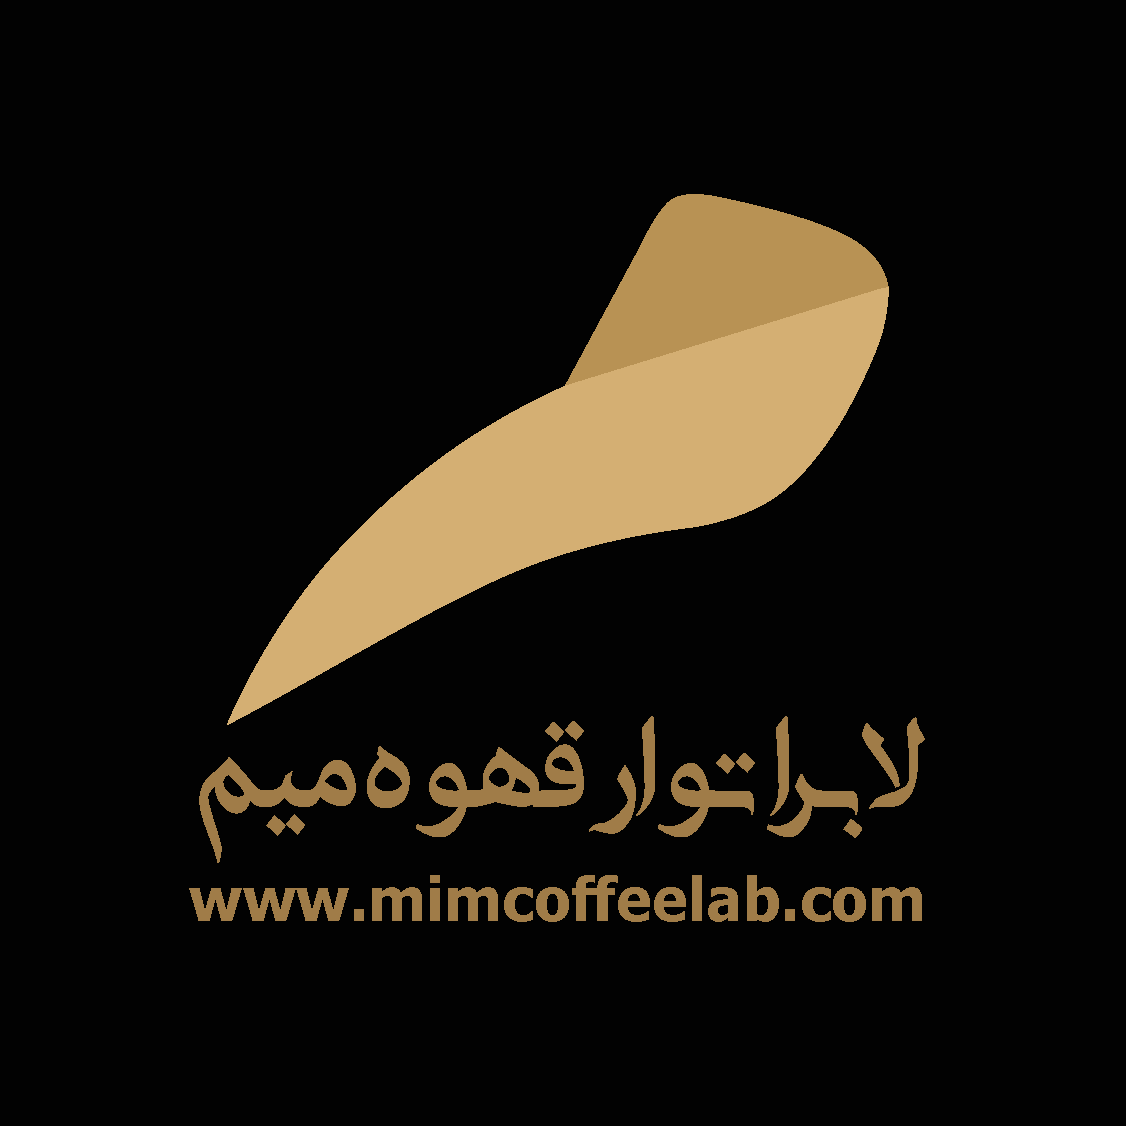 mimcoffeelab